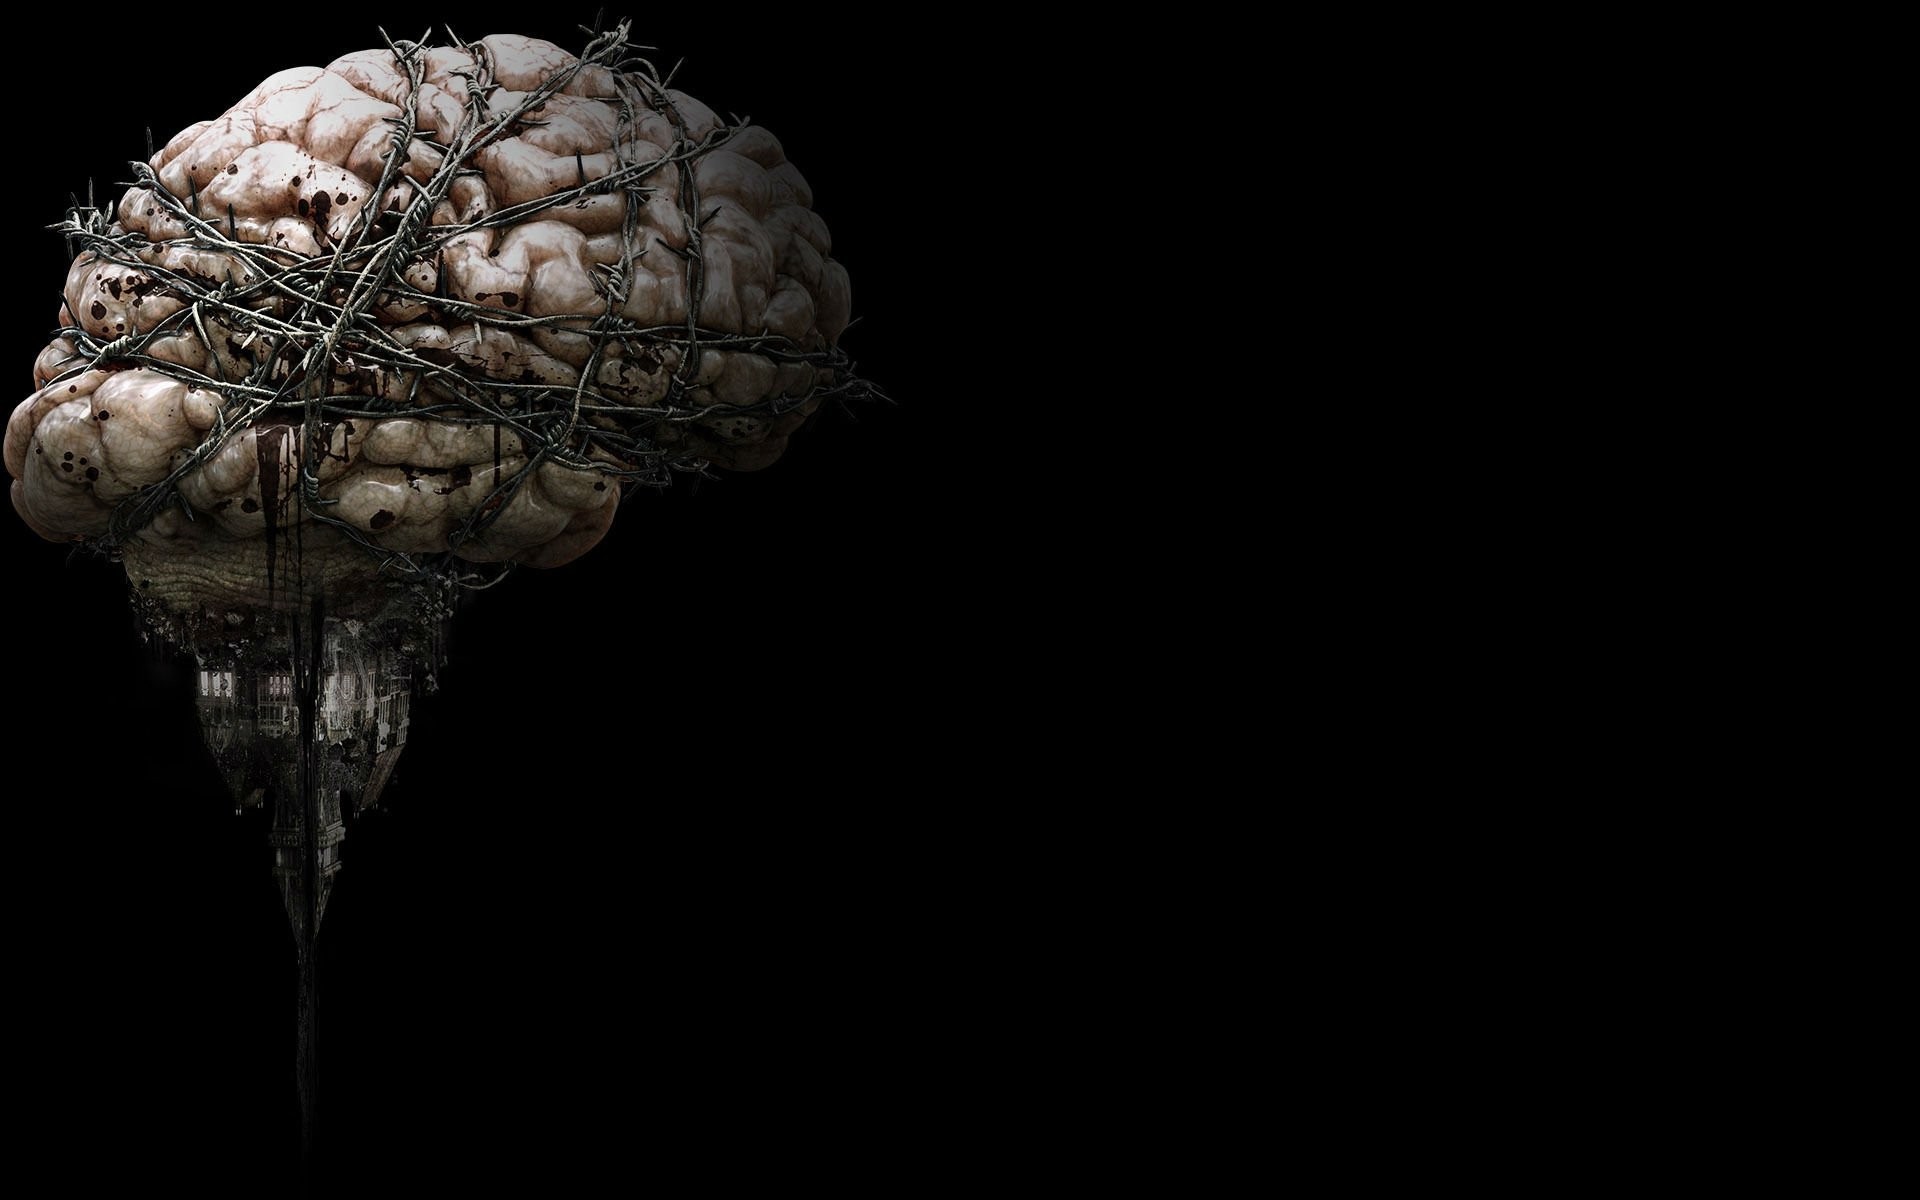 cerebro fondo de pantalla hd,cabeza,fotografía de naturaleza muerta,cerebro,fotografía,stock photography